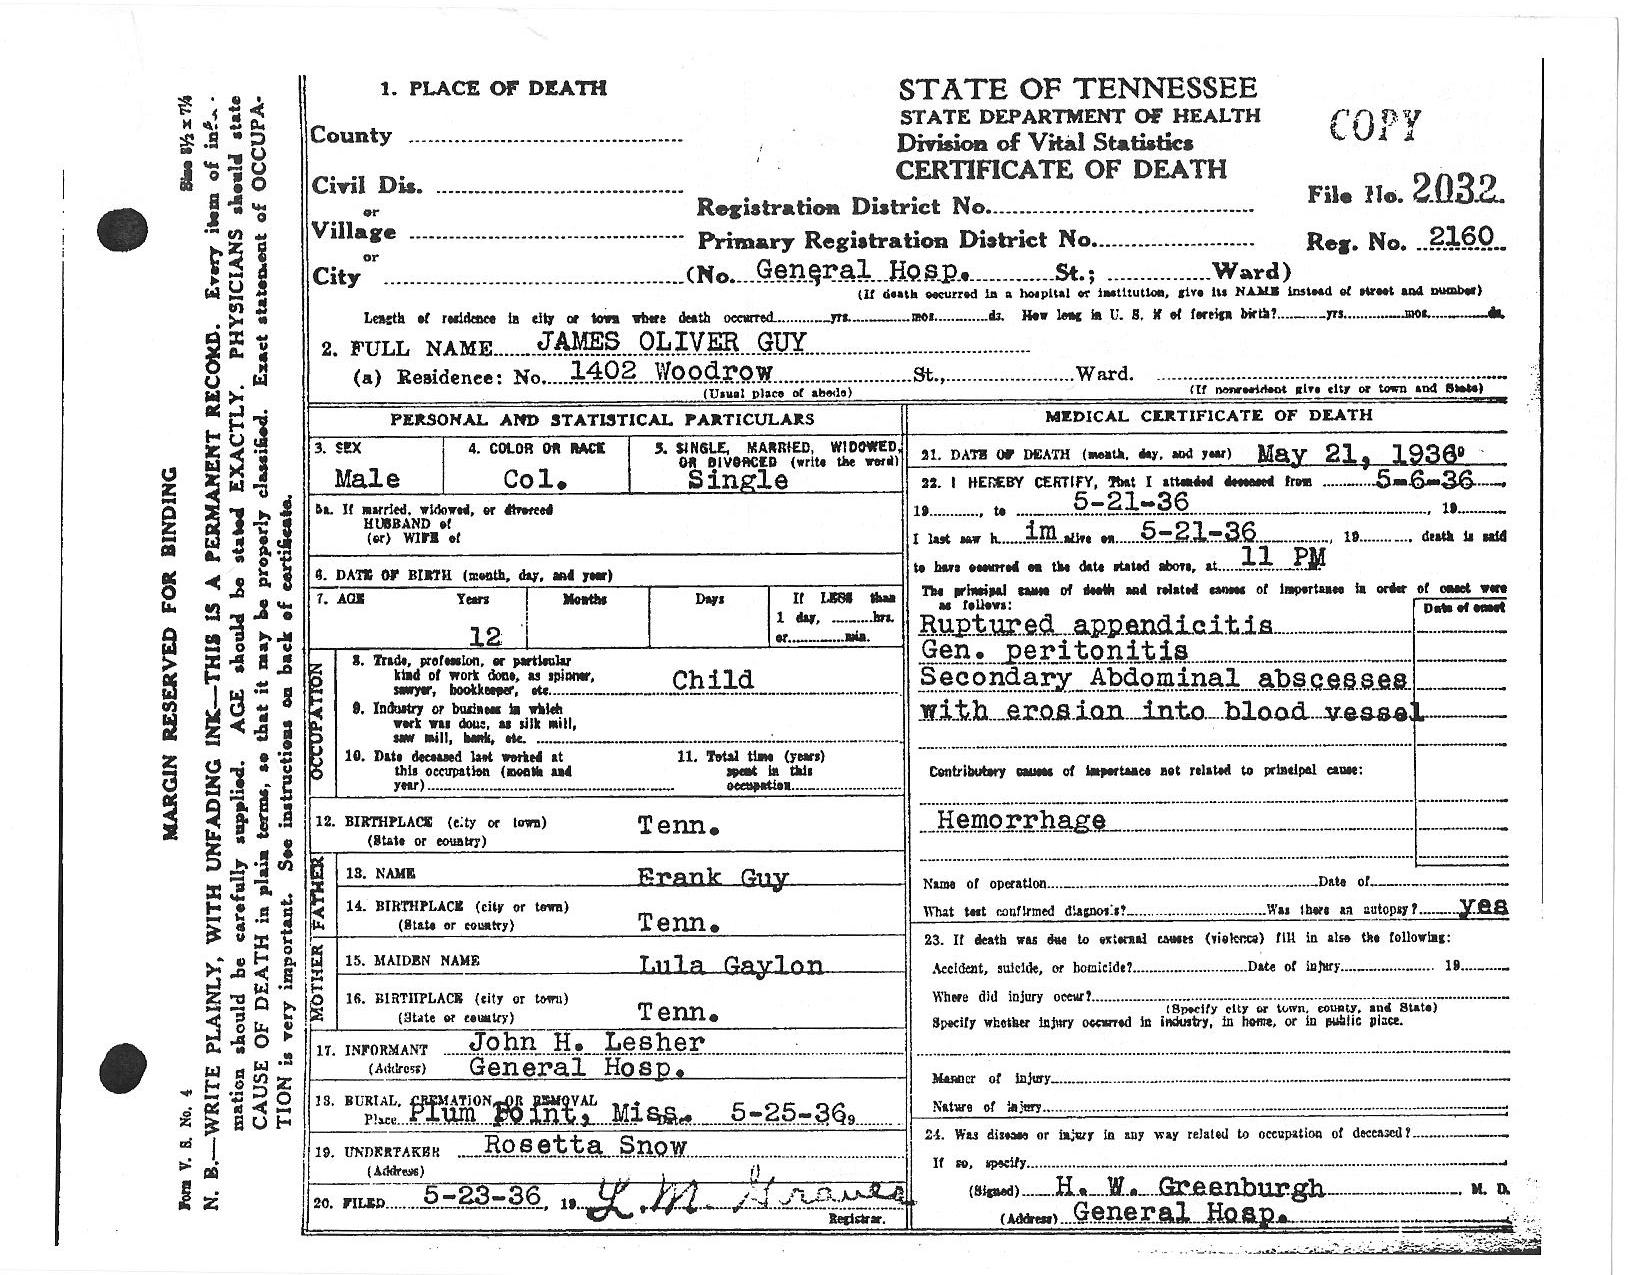 James Oliver (Buddy) Guy's Death Certificate.